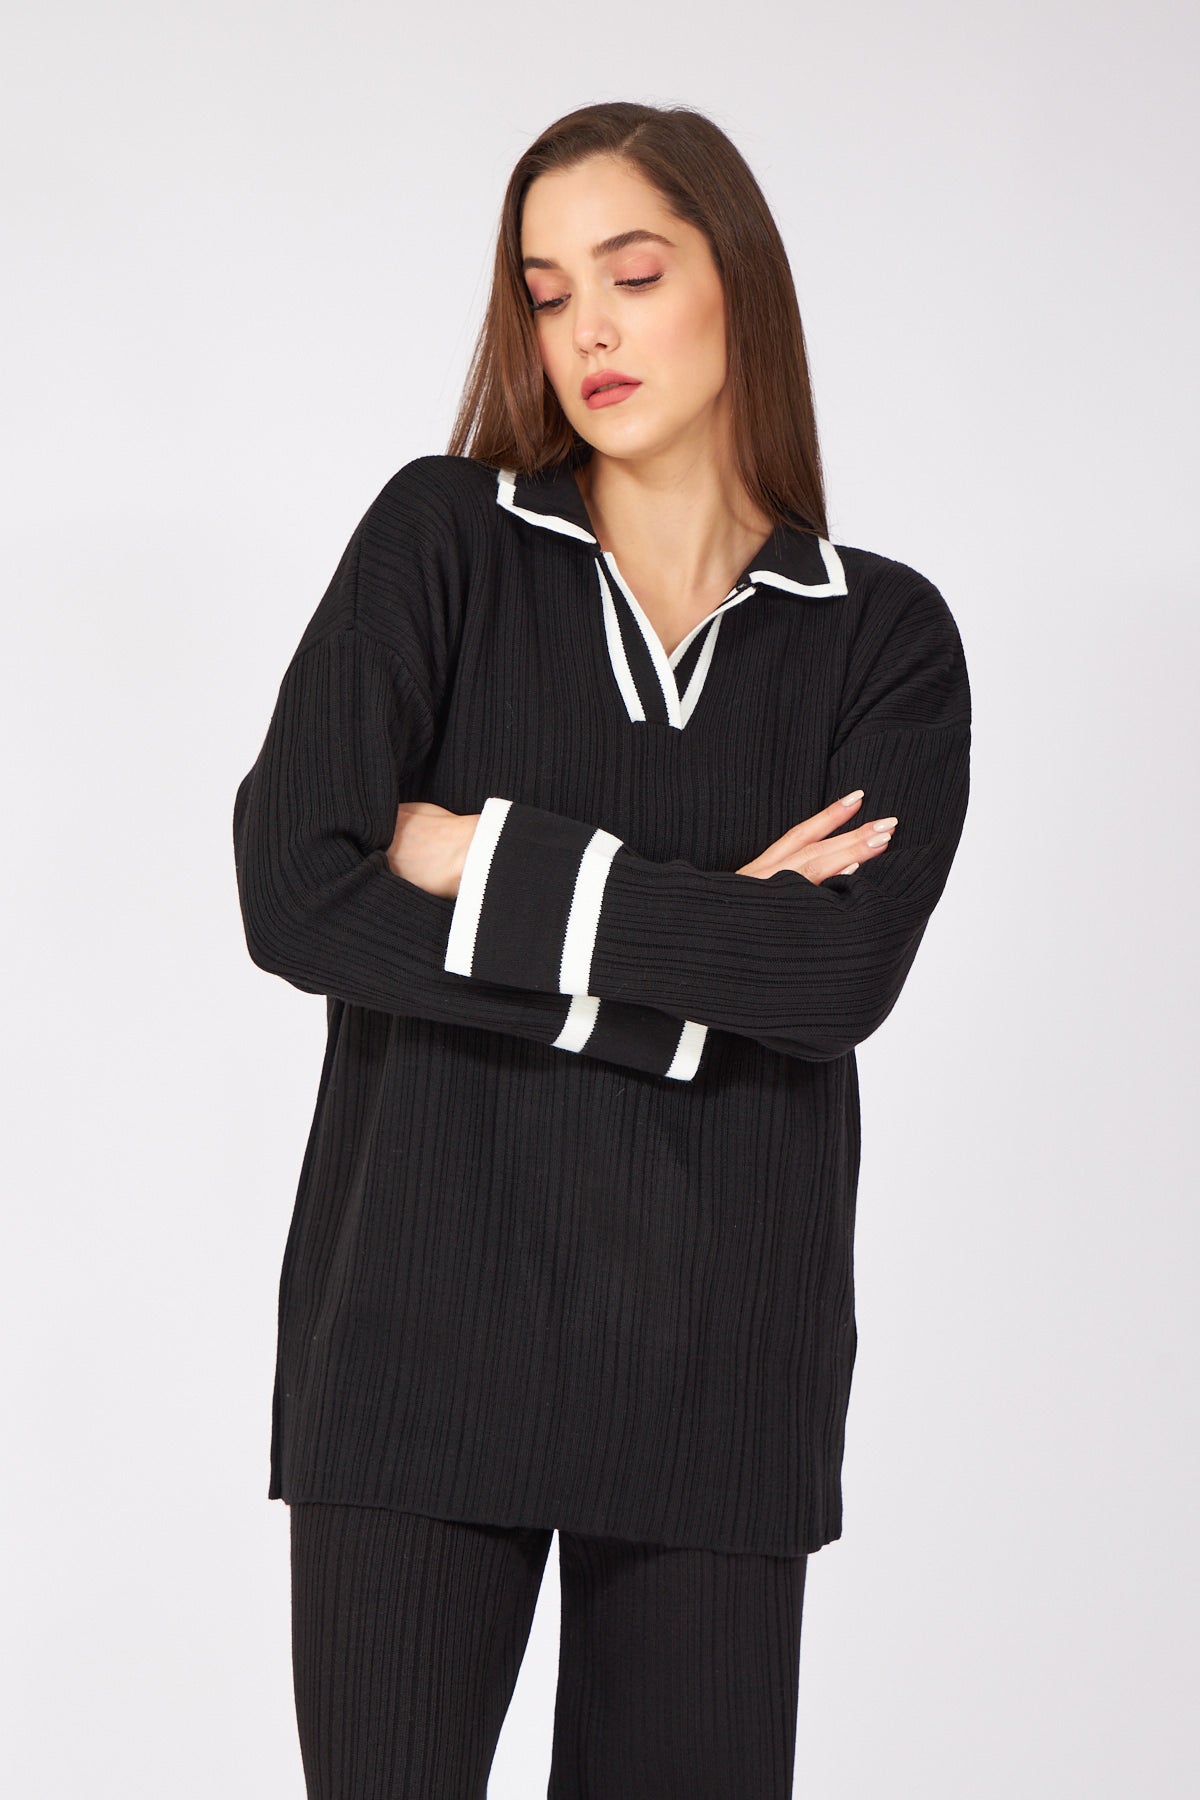 Black white Striped Polo Neck Knitwear Suit - Lebbse